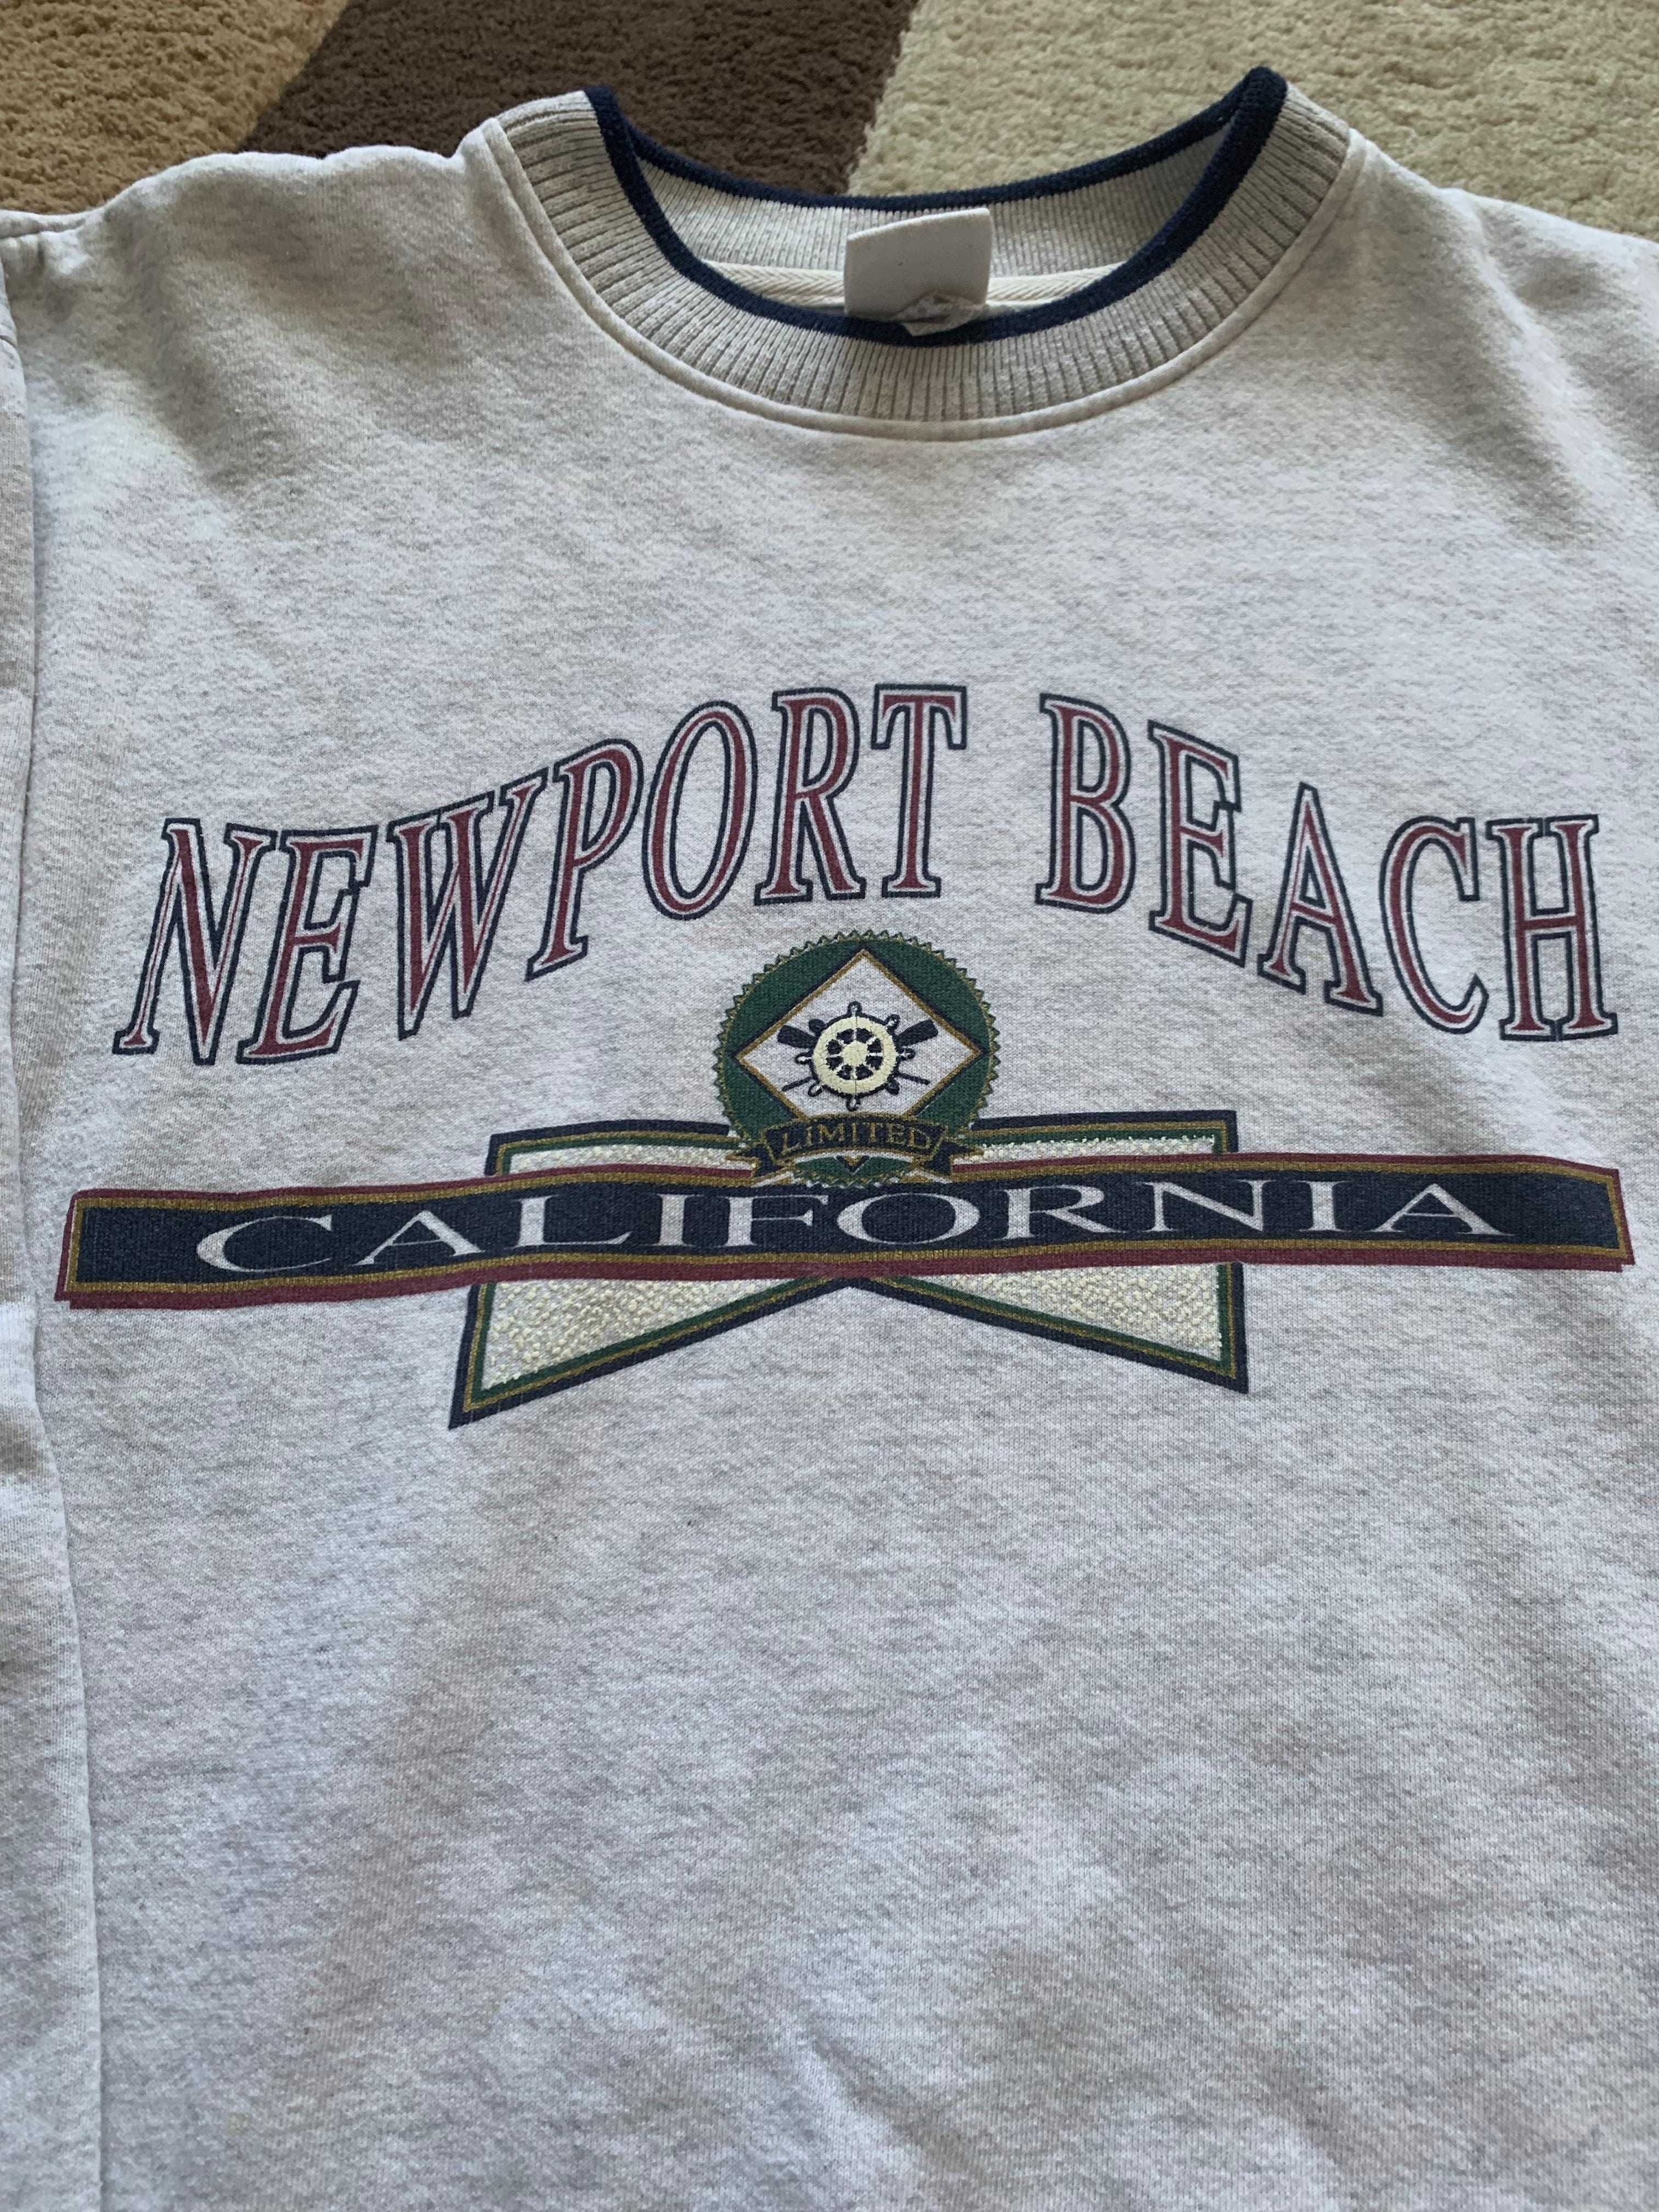 Bluza Vintage NewPort Beach California 80s-90s Paper Tag X Large